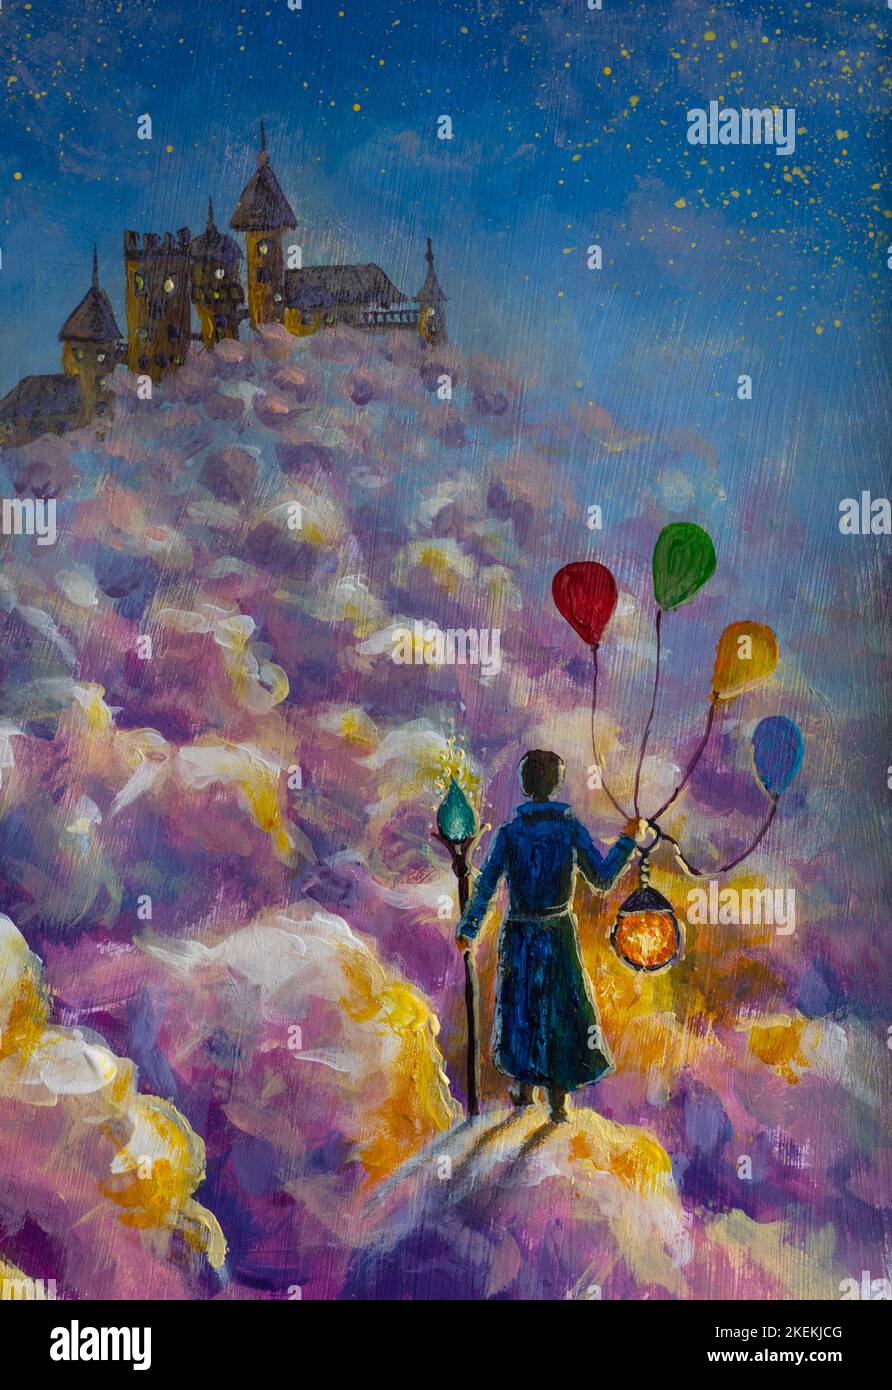 https://c8.alamy.com/comp/2KEKJCG/fantasy-art-the-sorcerer-king-returns-to-magic-castle-in-purple-clouds-acrylic-painting-illustration-for-childrens-fairy-tale-book-2KEKJCG.jpg